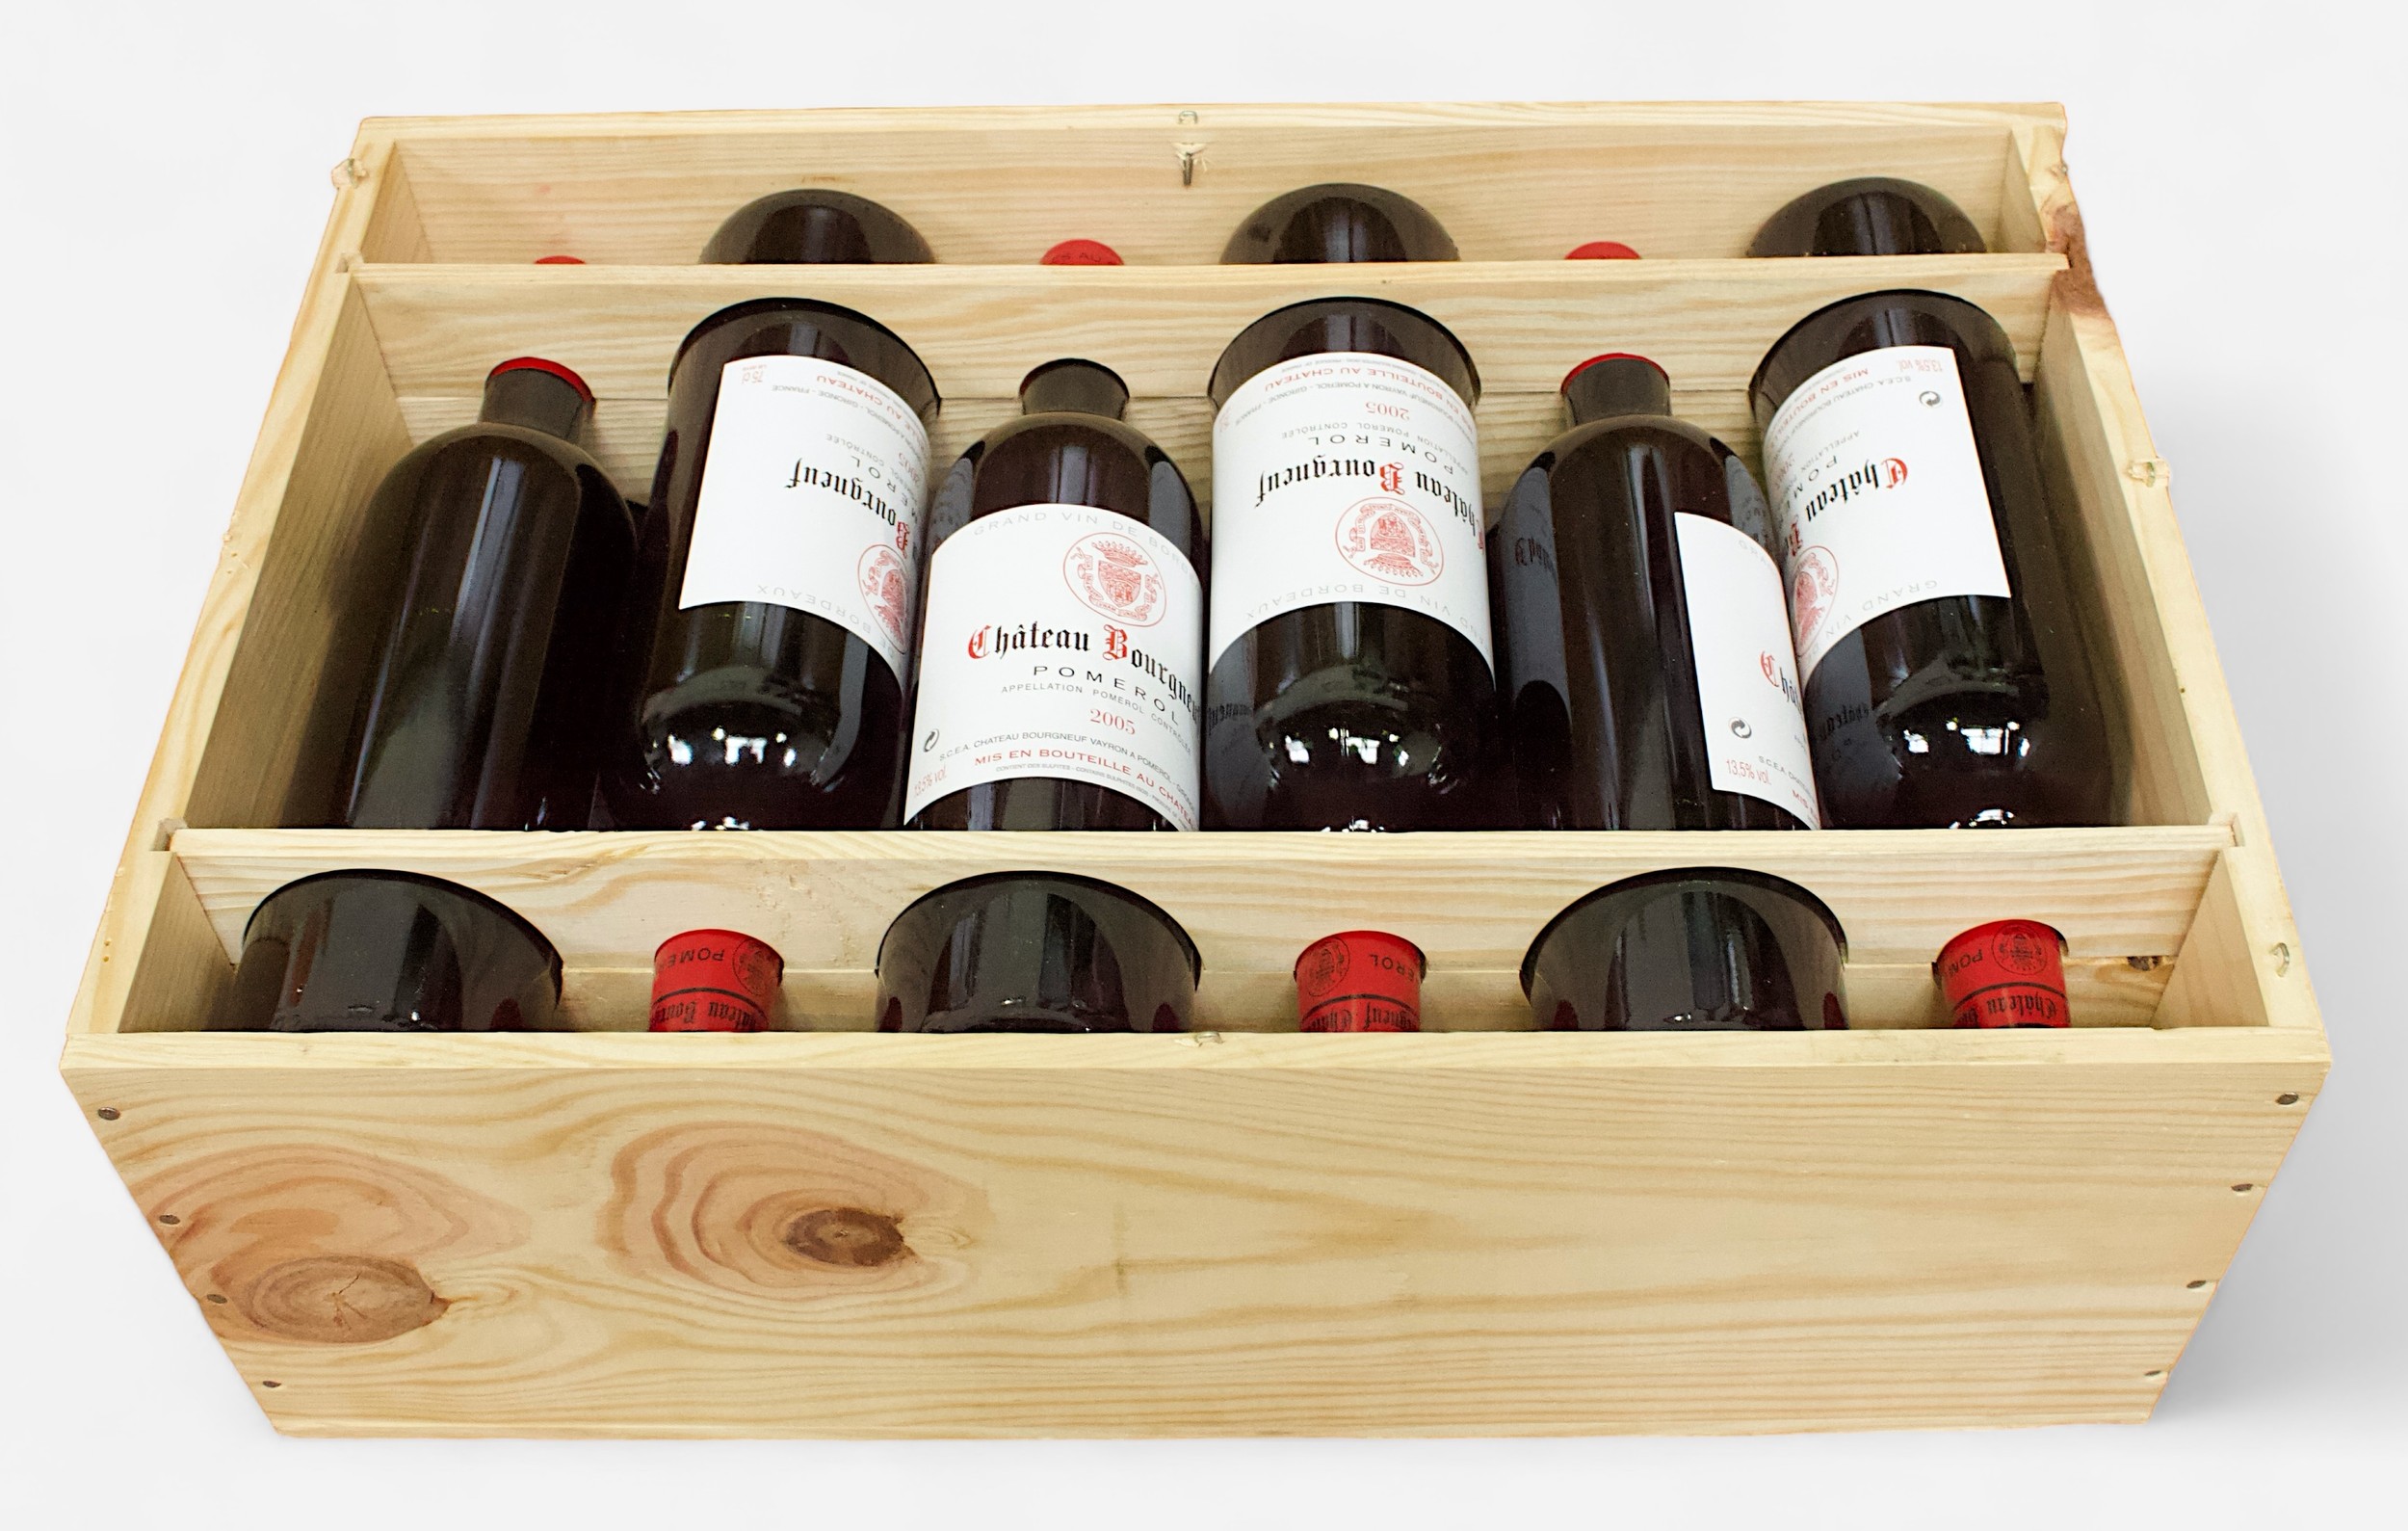 A case of twelve 75cl bottles of Chateau Bourgneuf Pomerol, Grand vin de Bordeaux, 2005 vintage, all - Image 2 of 2